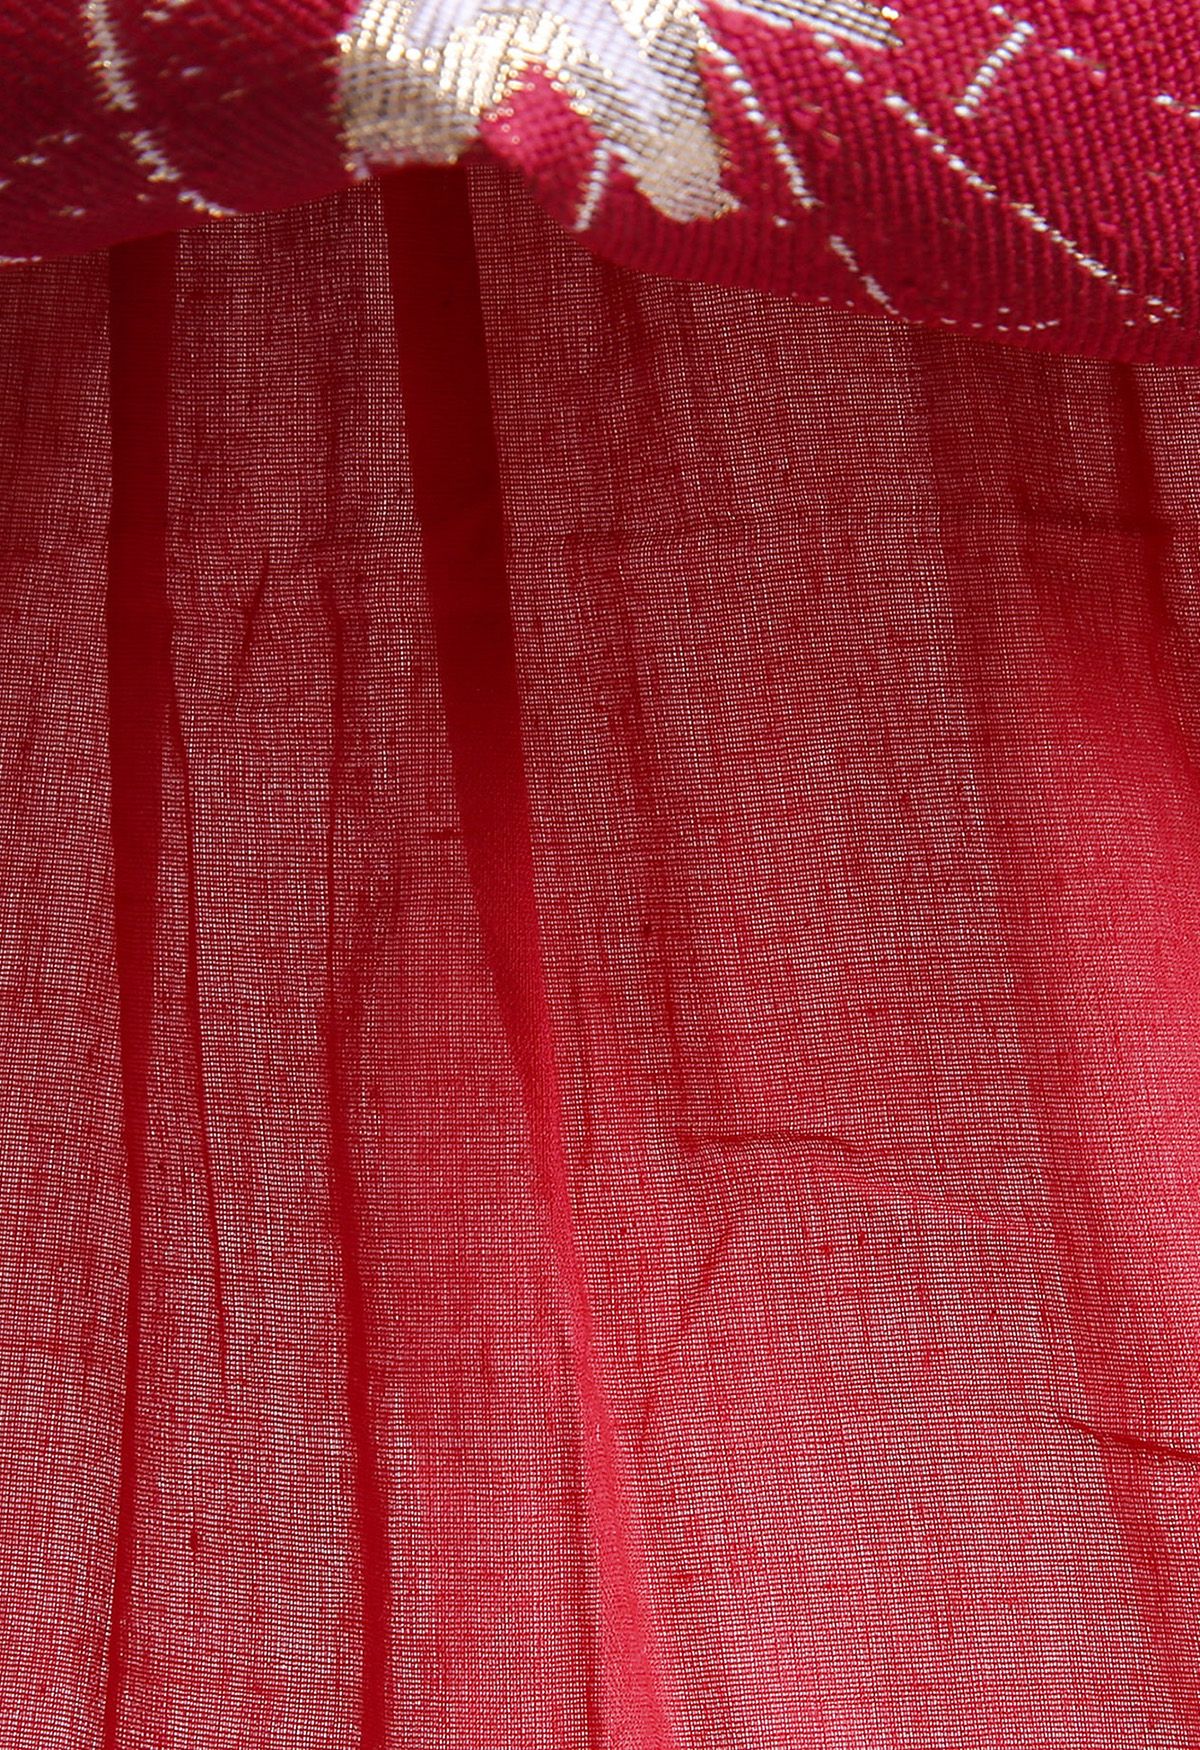 Mädchen-Jacquard-Blatt-Rüschen Bowknot Plissee-Kleid in Rot